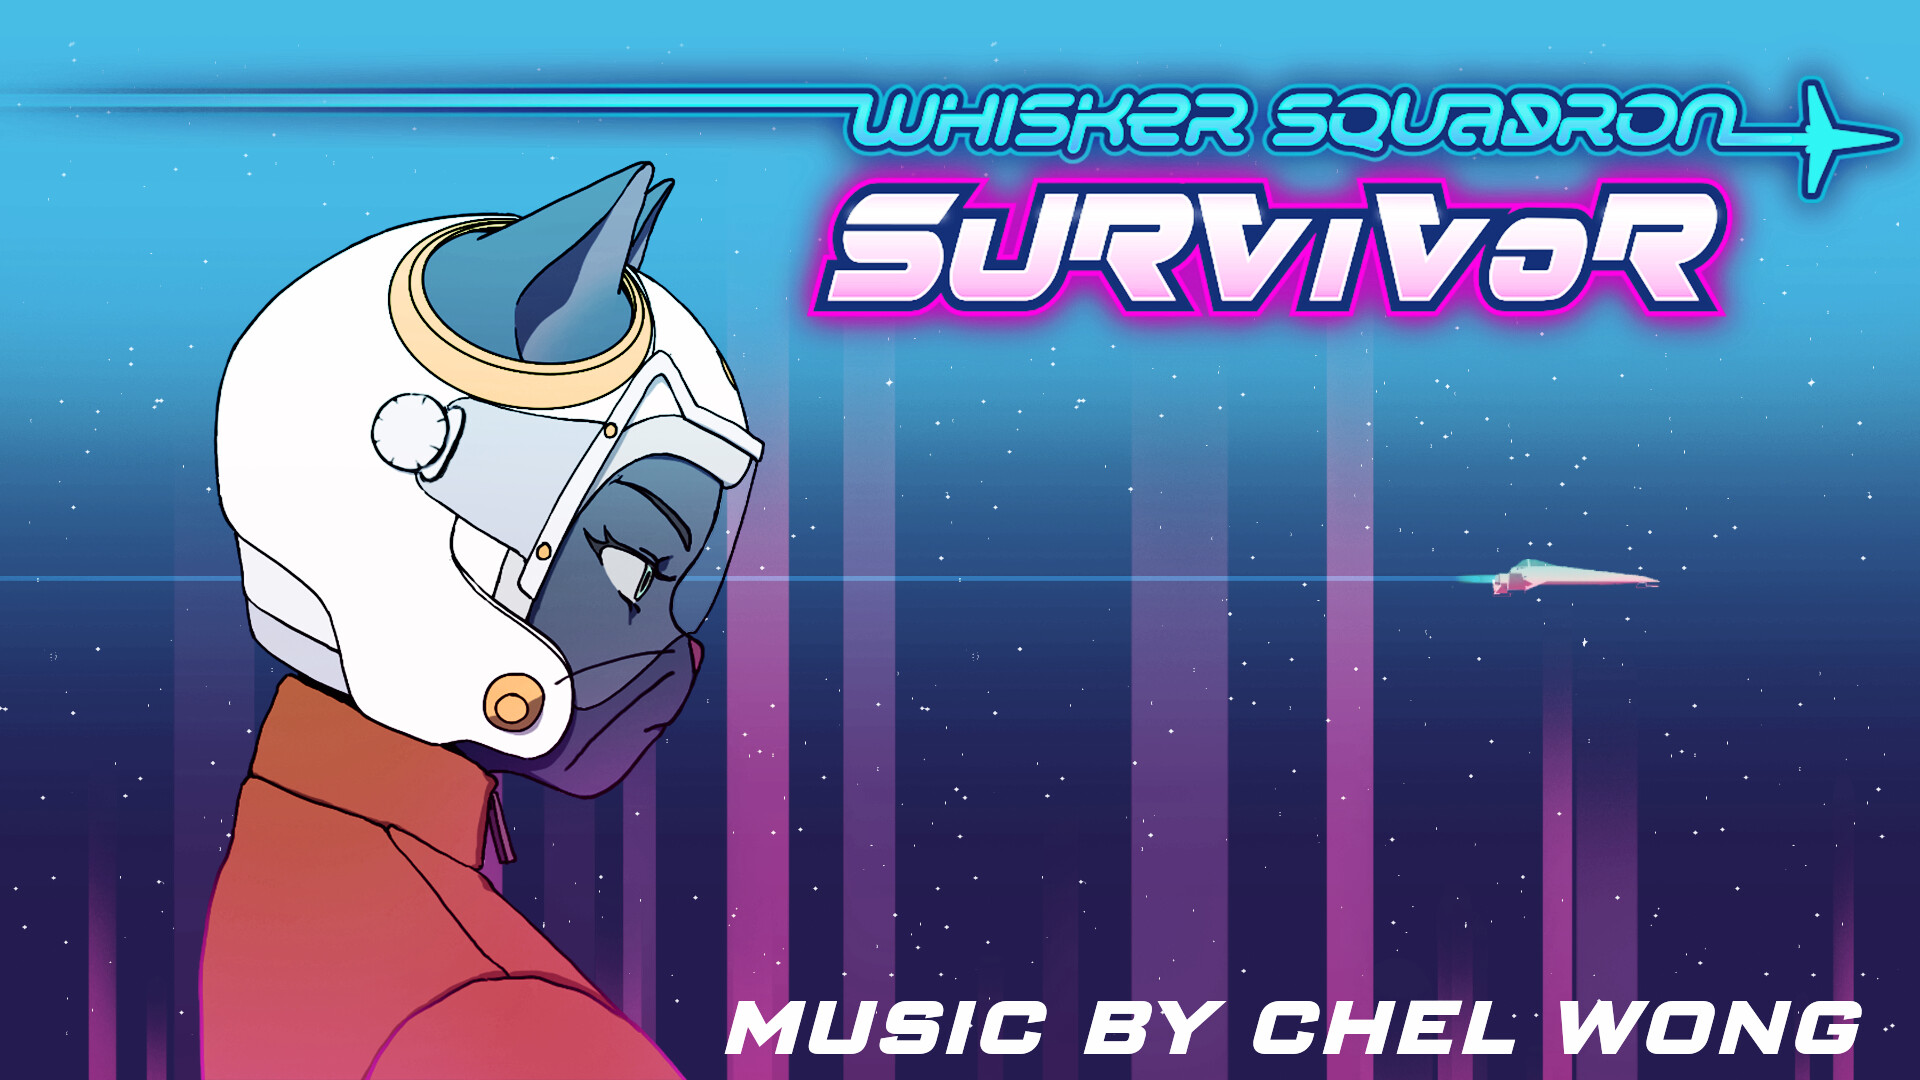 Whisker Squadron: Survivor Soundtrack Featured Screenshot #1